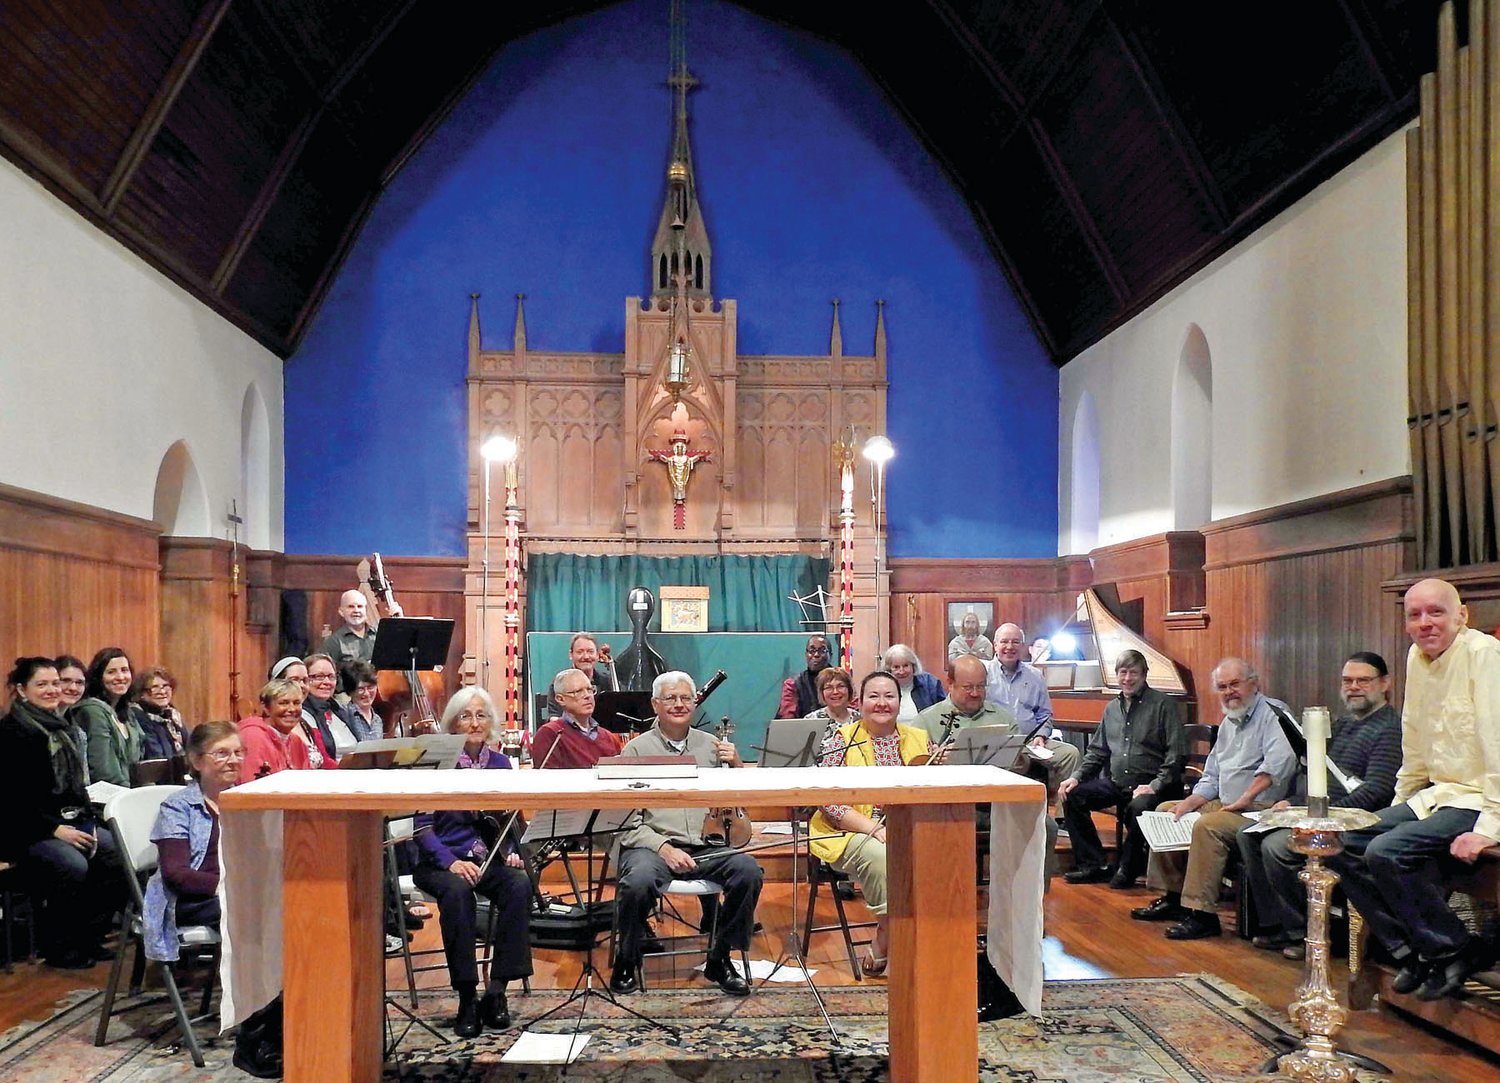 The choir at Saint Andrew’s Episcopal Church, Lambertville, N.J., presents its next Evensong Nov. 4.